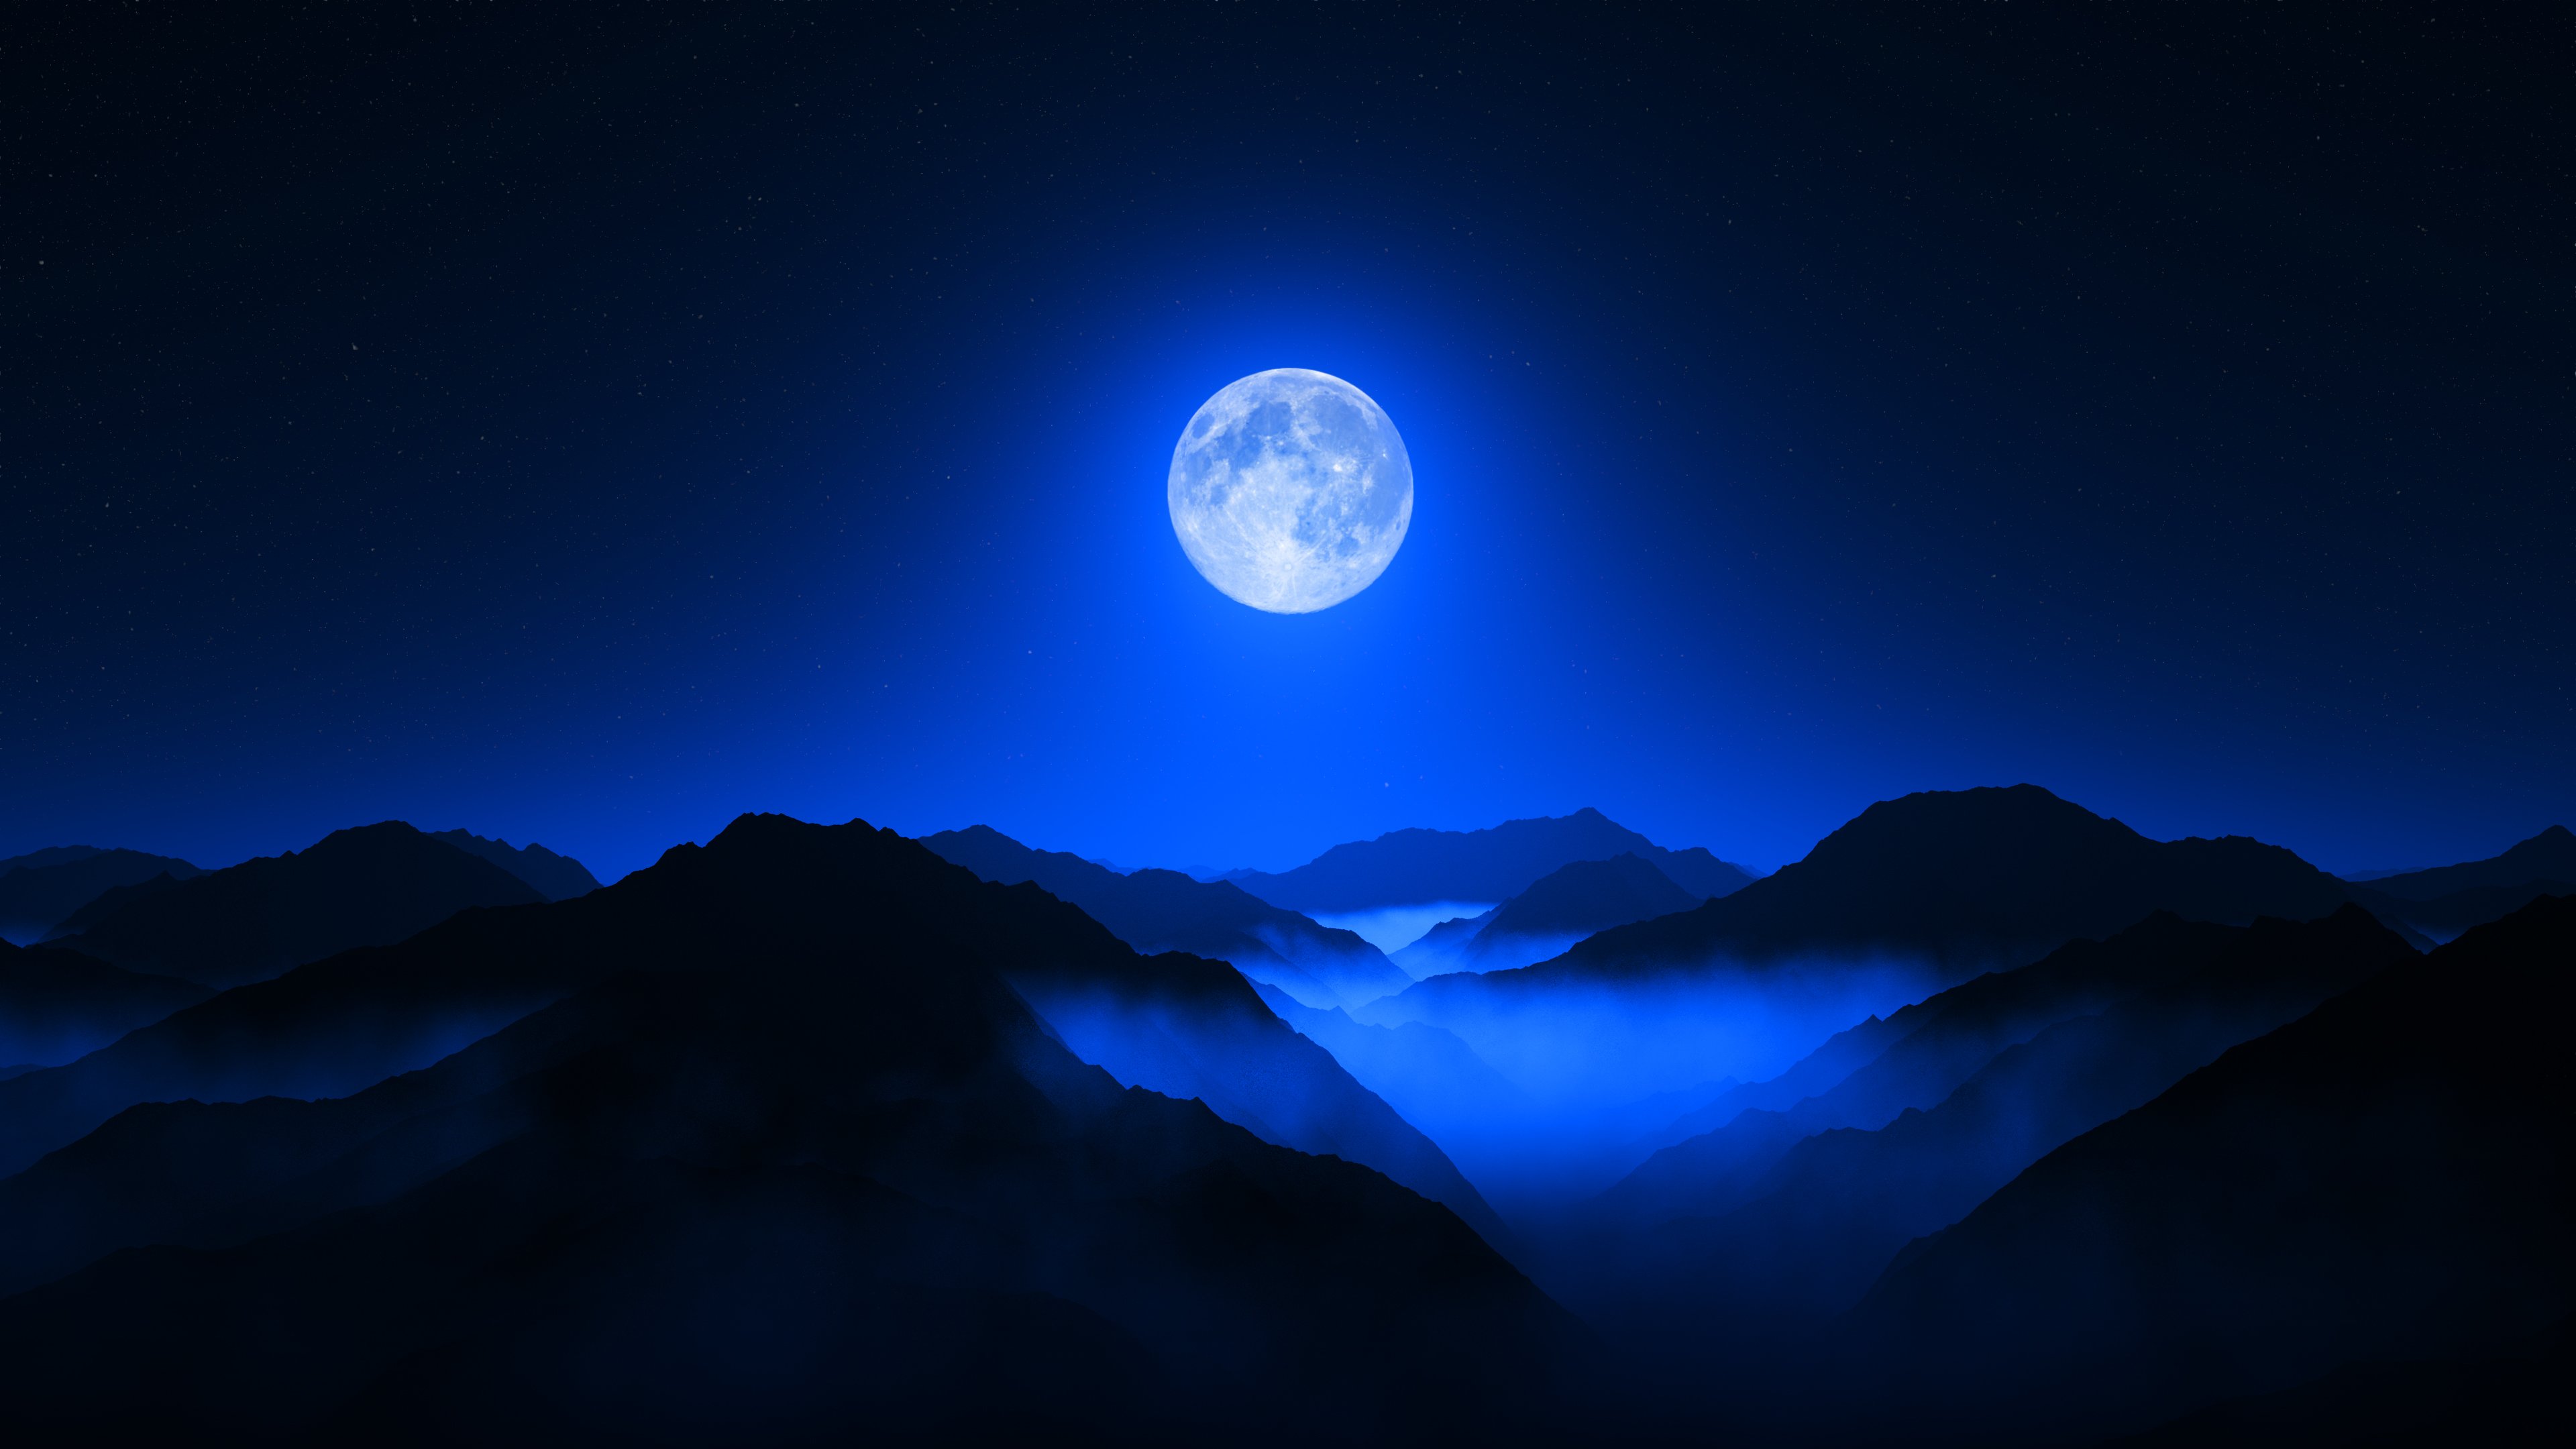 Twilight Moon, Valley, Mountain range, Night sky, Foggy, Silhouette, Aerial view, 4k Free deskk wallpaper, Ultra HD